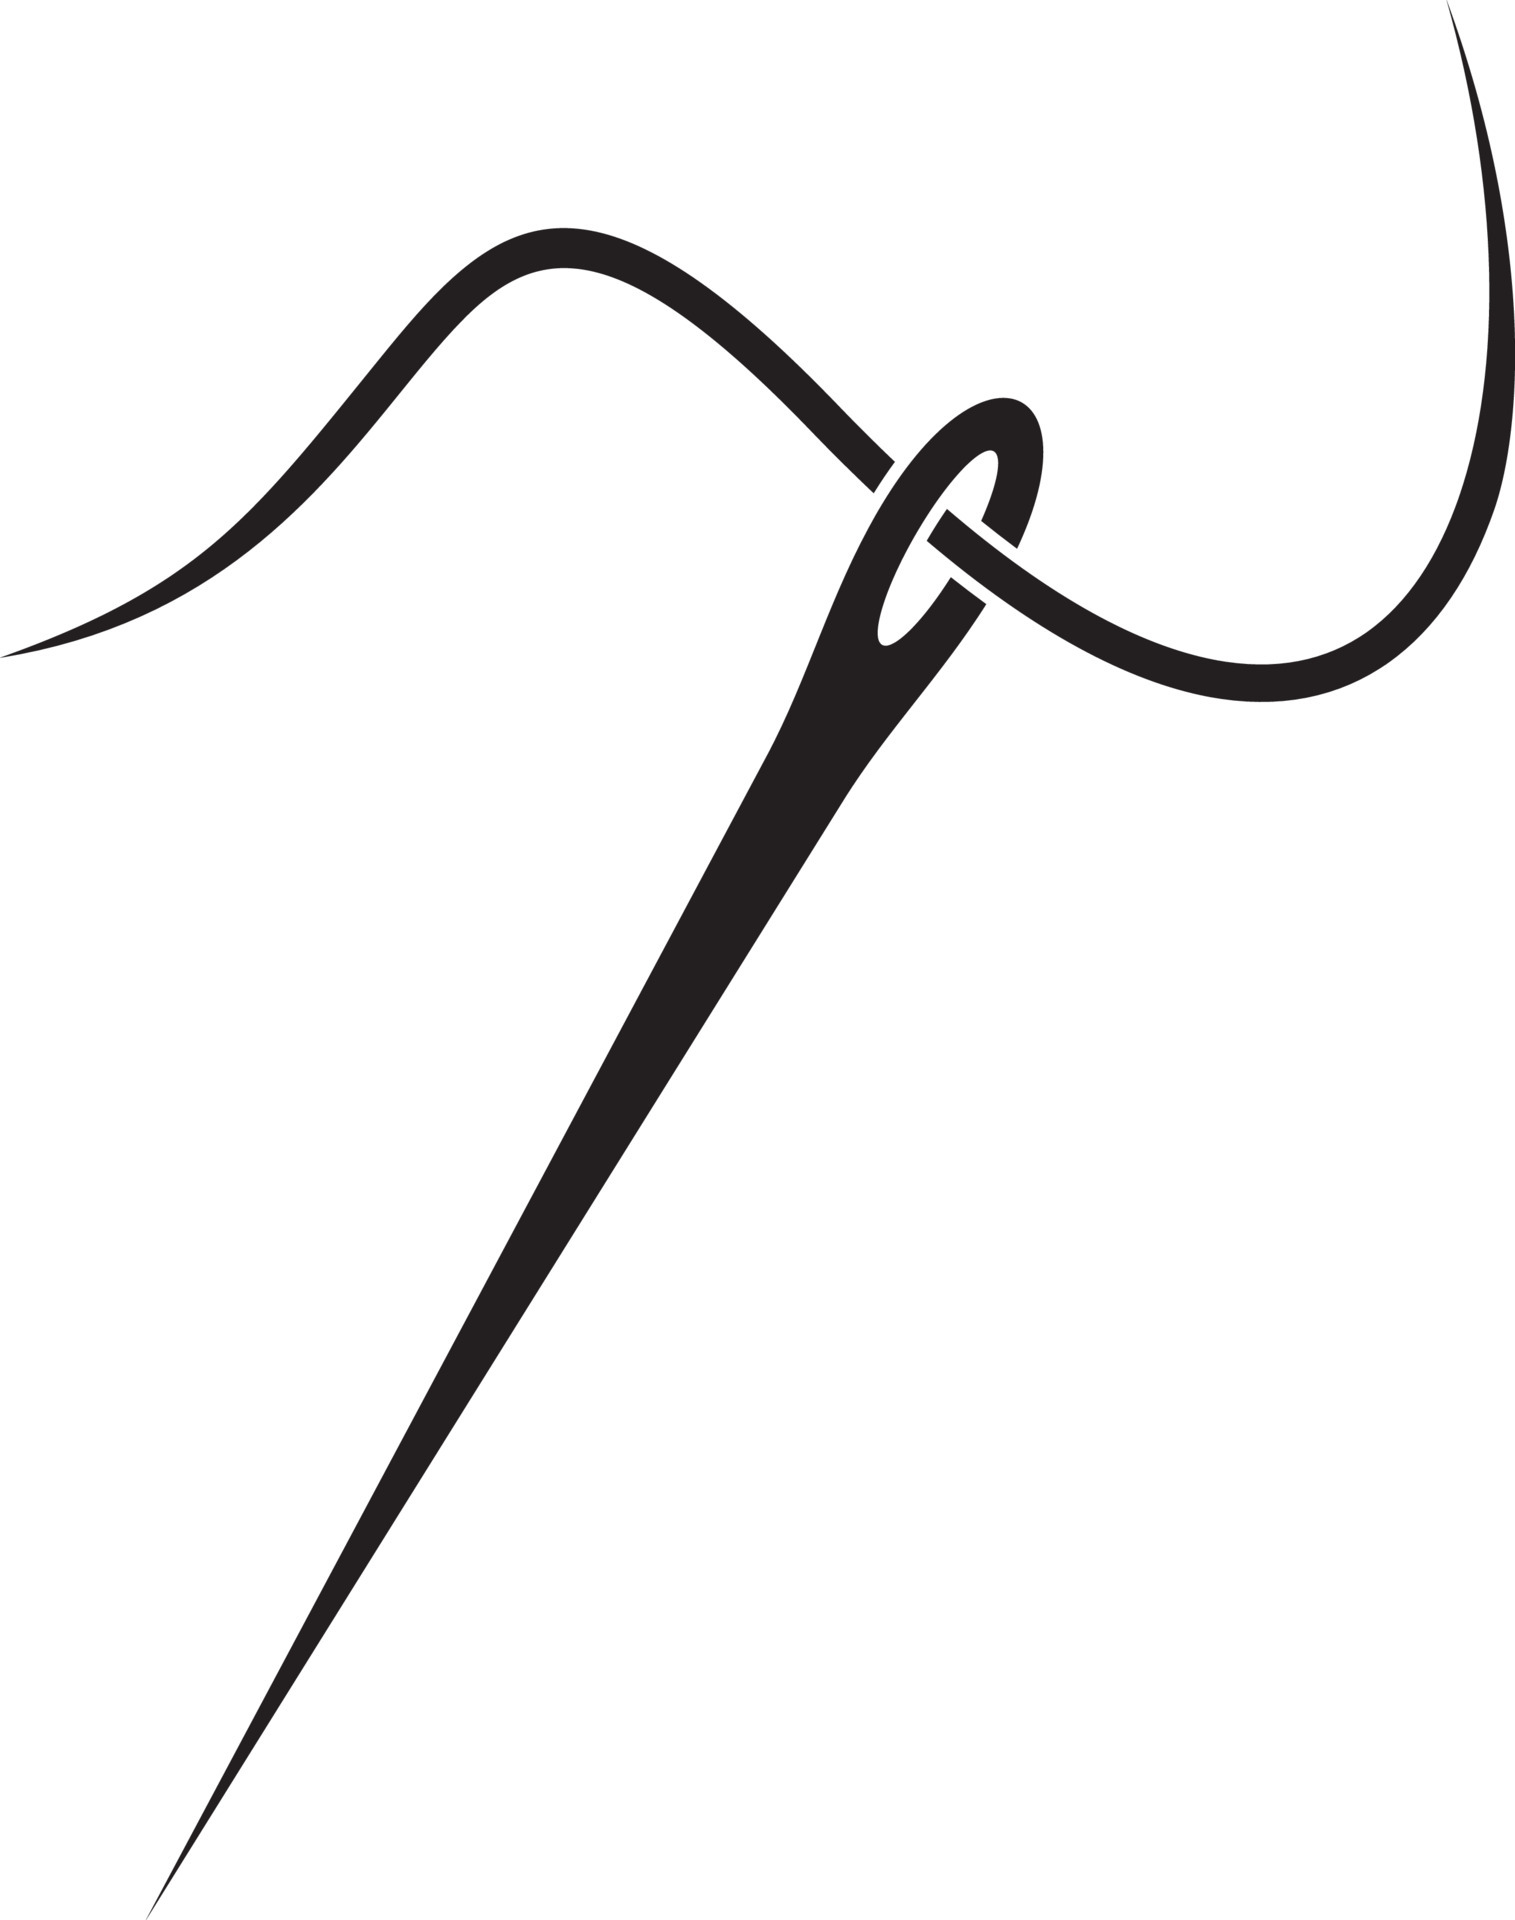 Sewing Needle Sketch - KibrisPDR